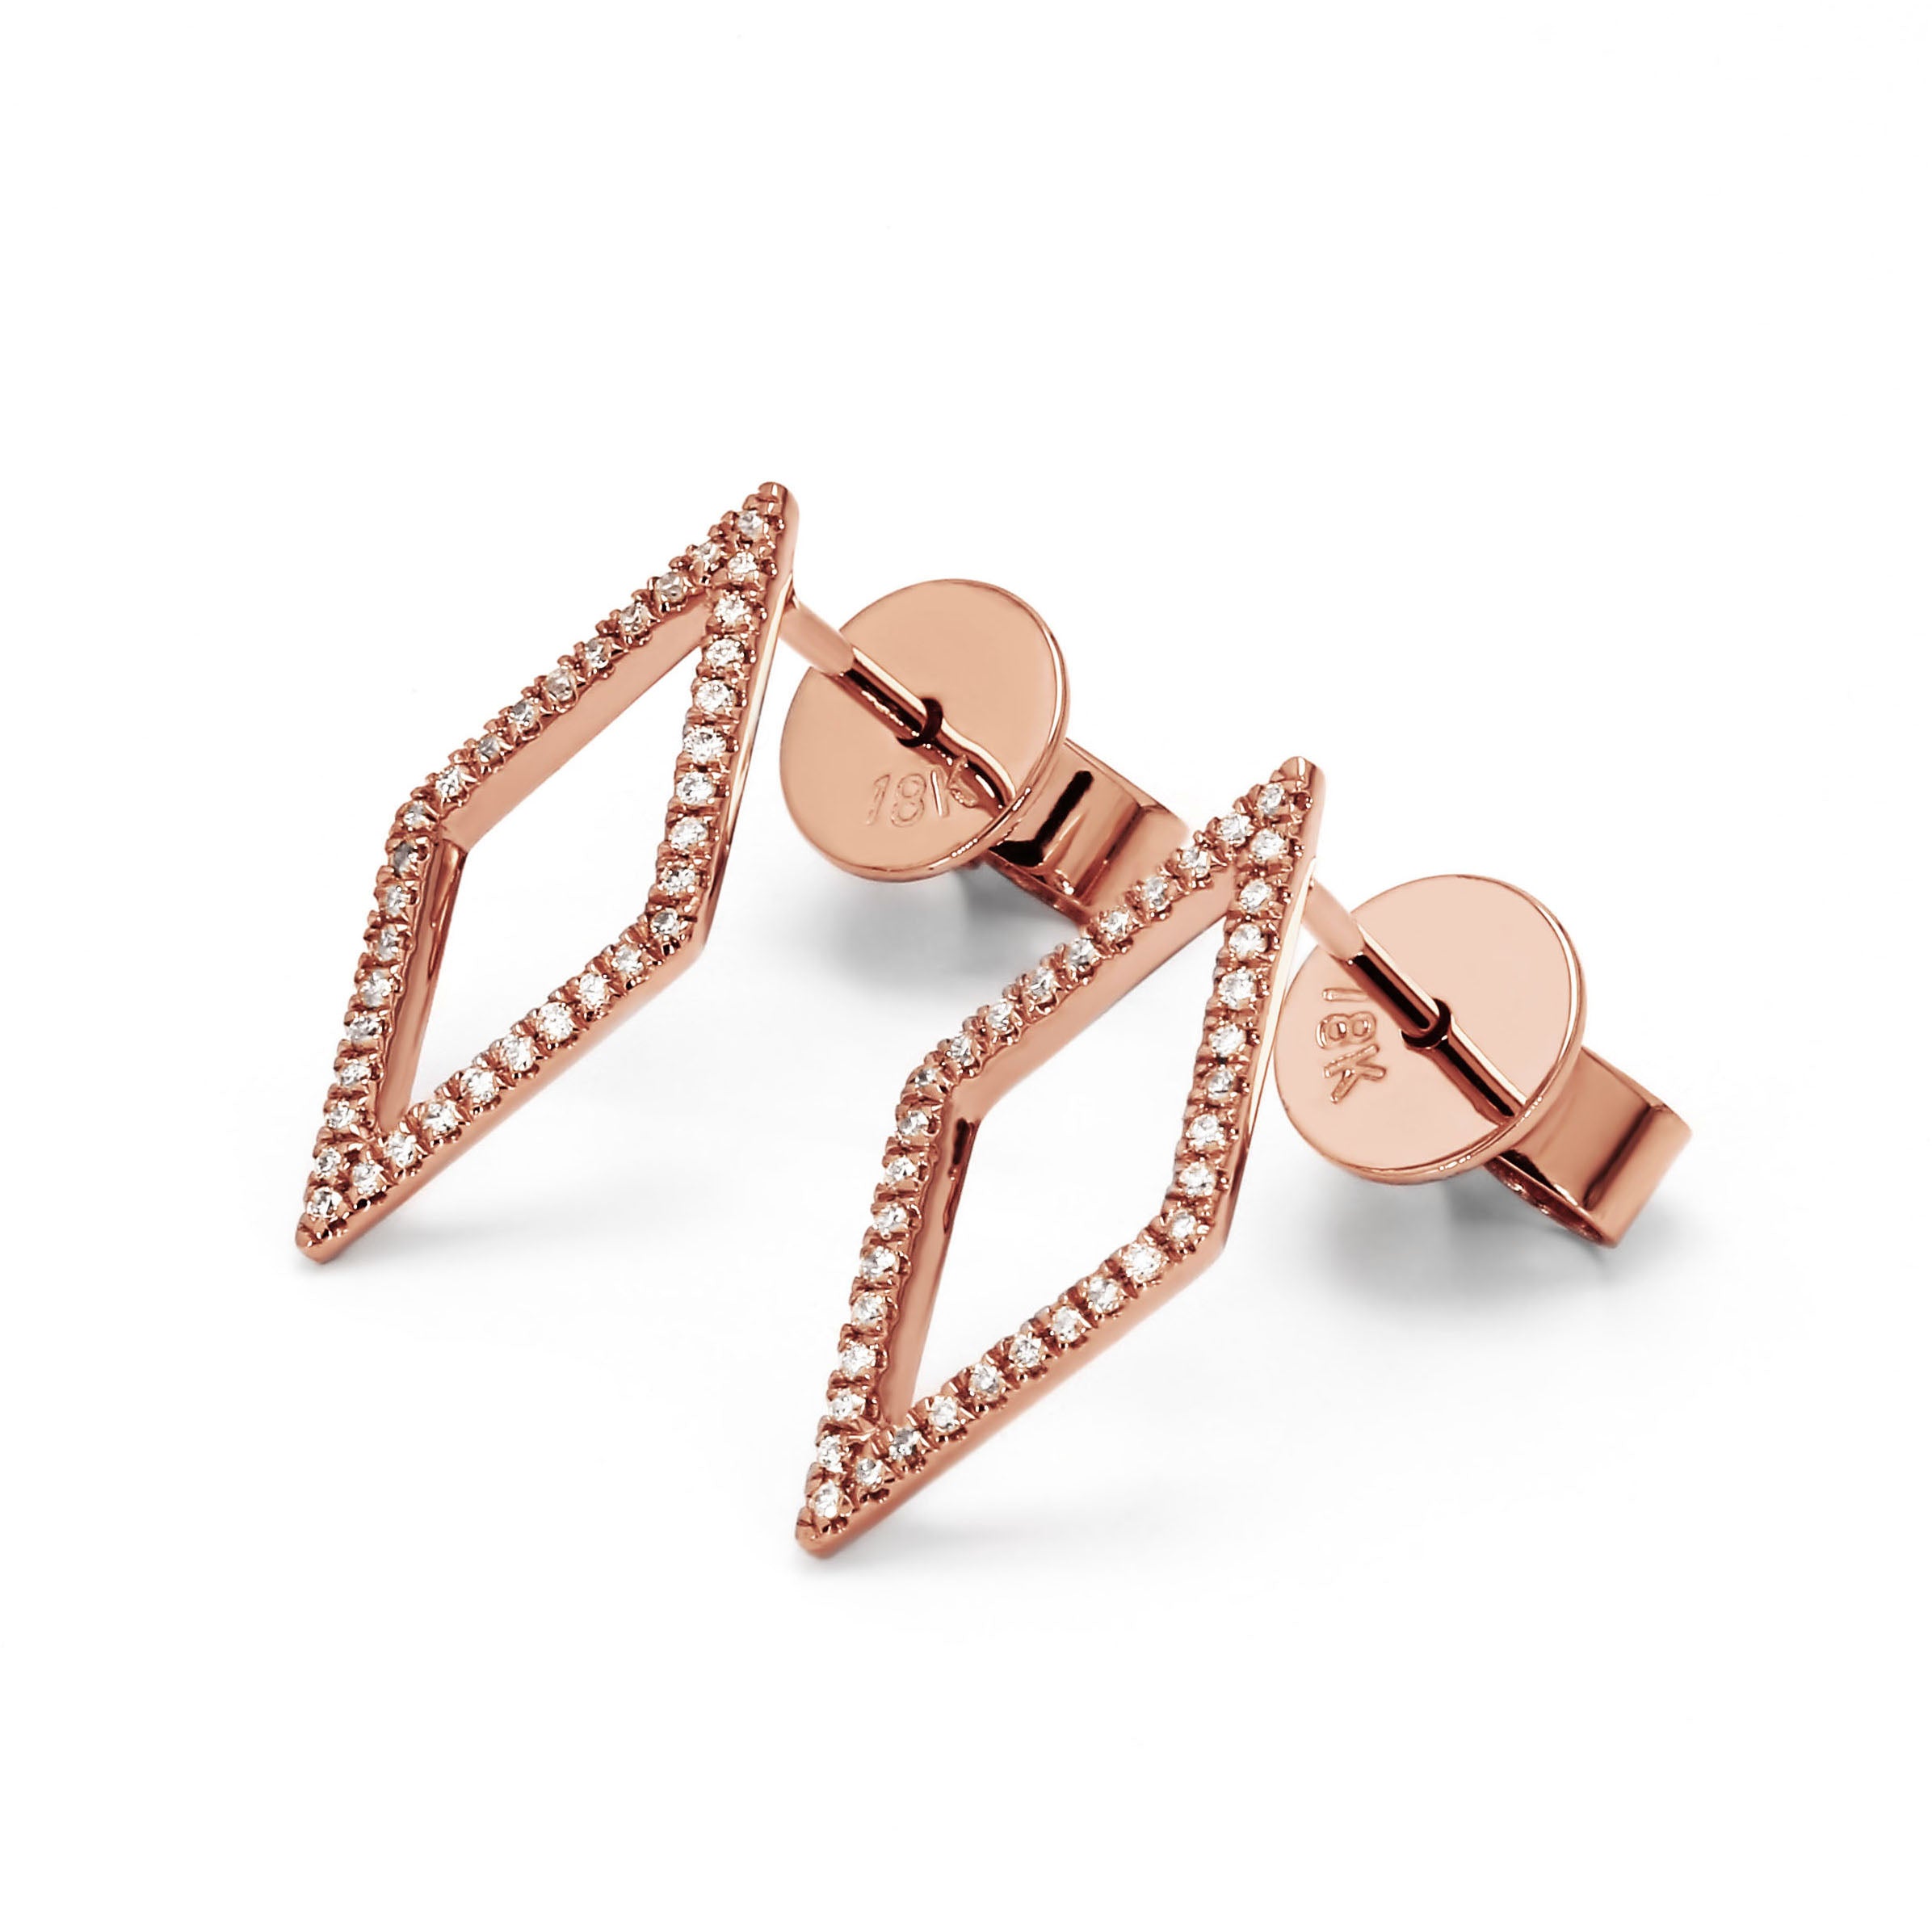 Adamar Jewels LUZ Cometa Earrings in 18K rose gold set with diamonds